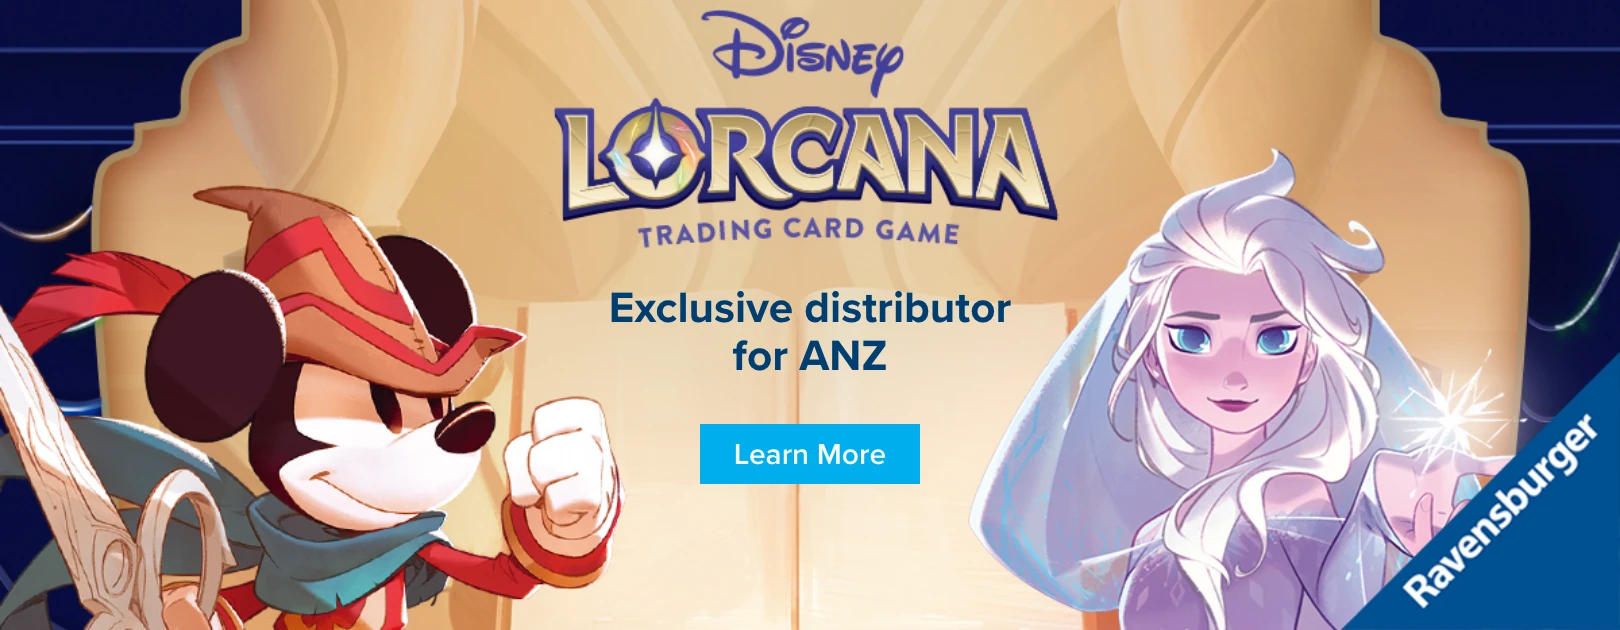 Disney Lorcana trading card game